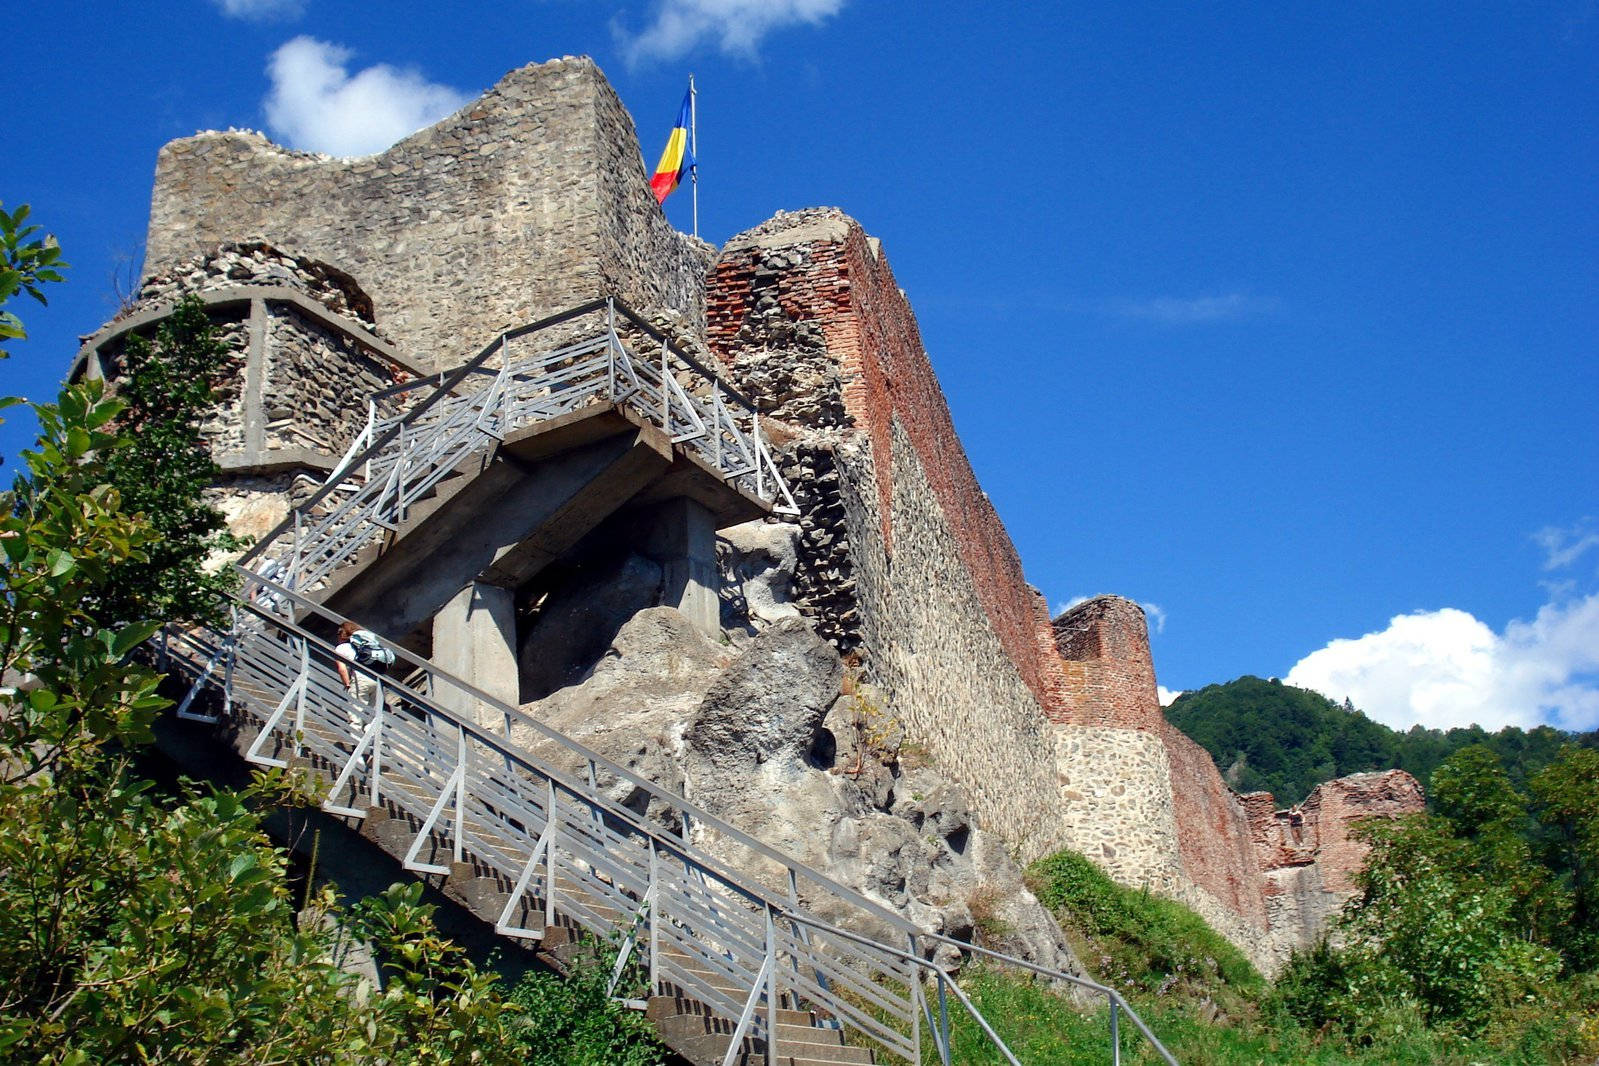 Caption: Historic Poenari Castle, Romania Wallpaper